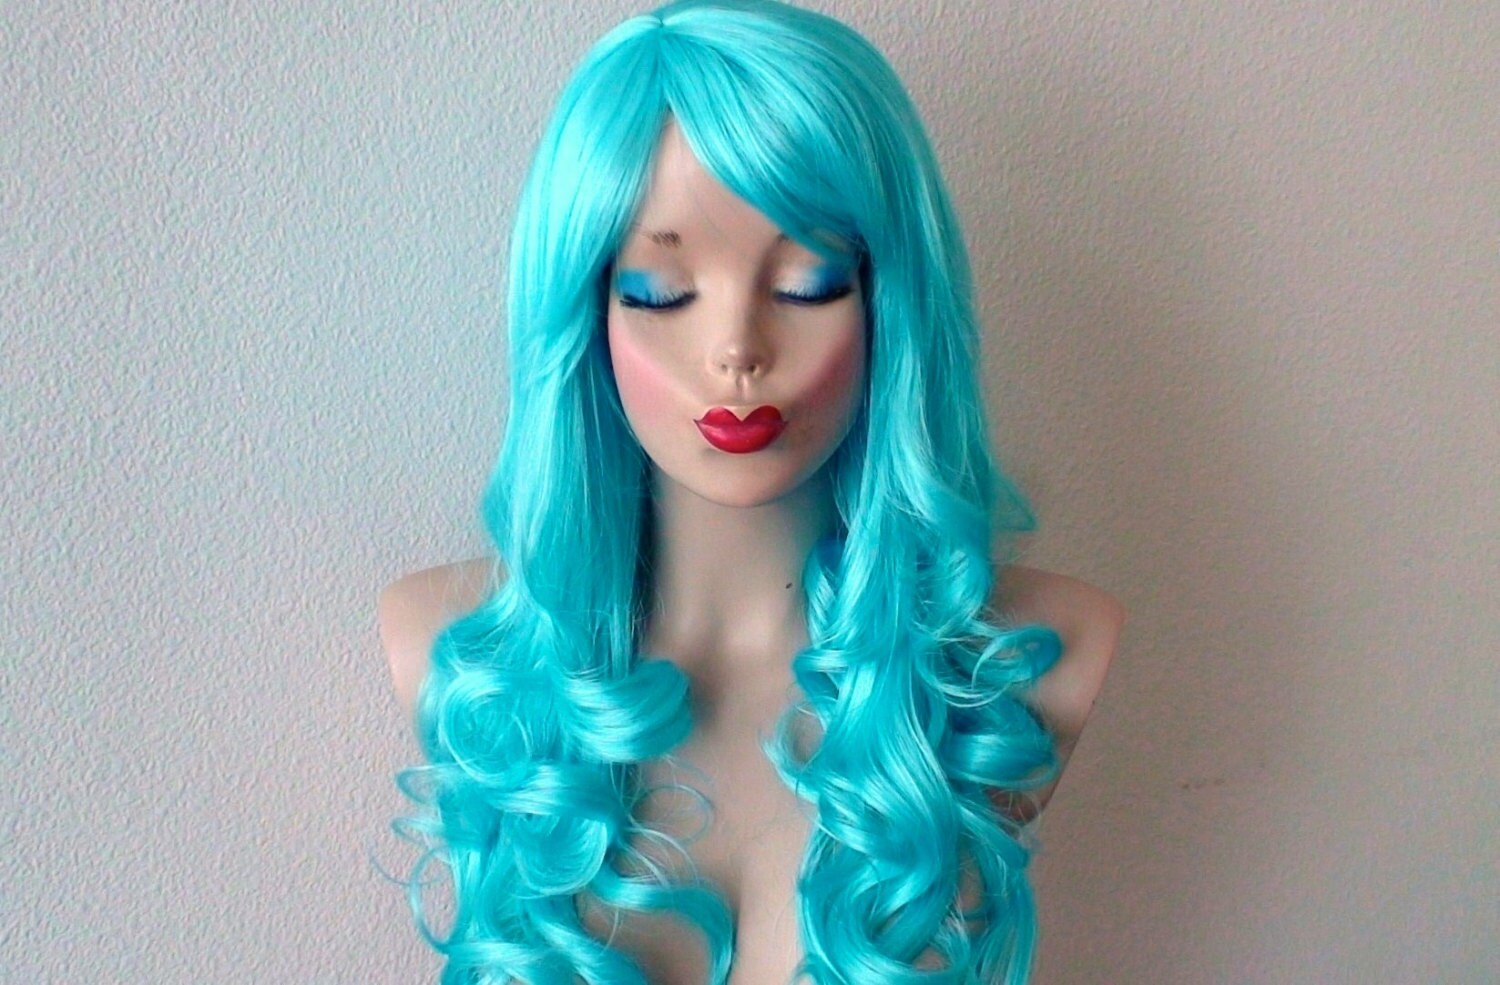 5. Blue Hair Wig - wide 8